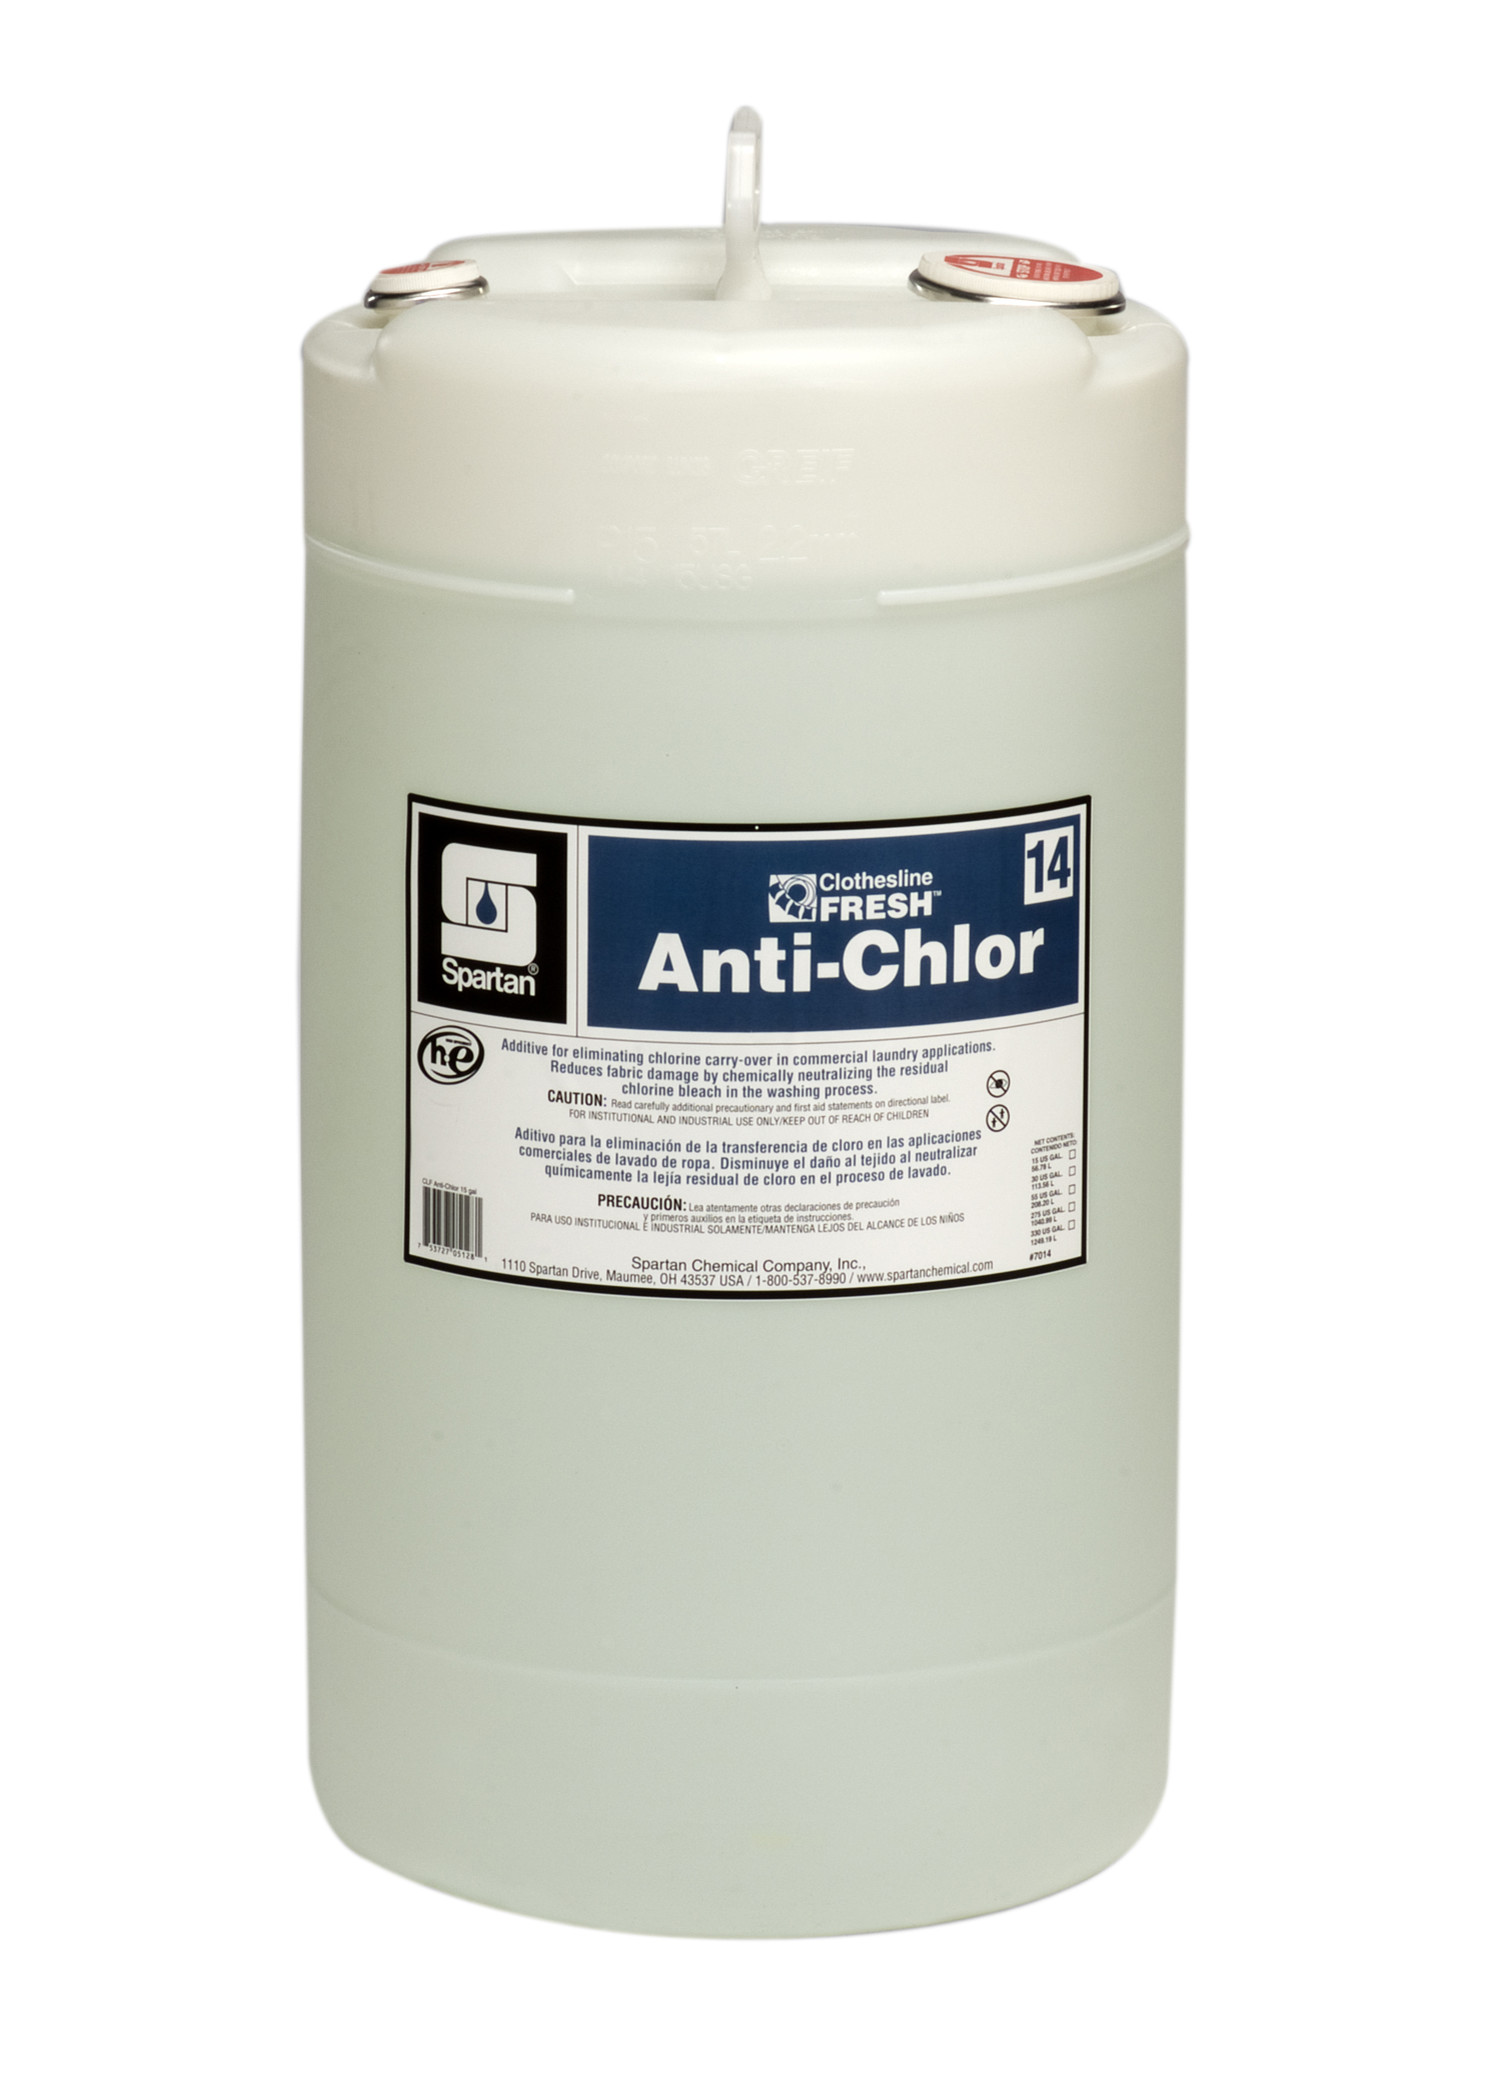 Spartan Chemical Company Clothesline Fresh Anti-Chlor 14, 15 GAL DRUM